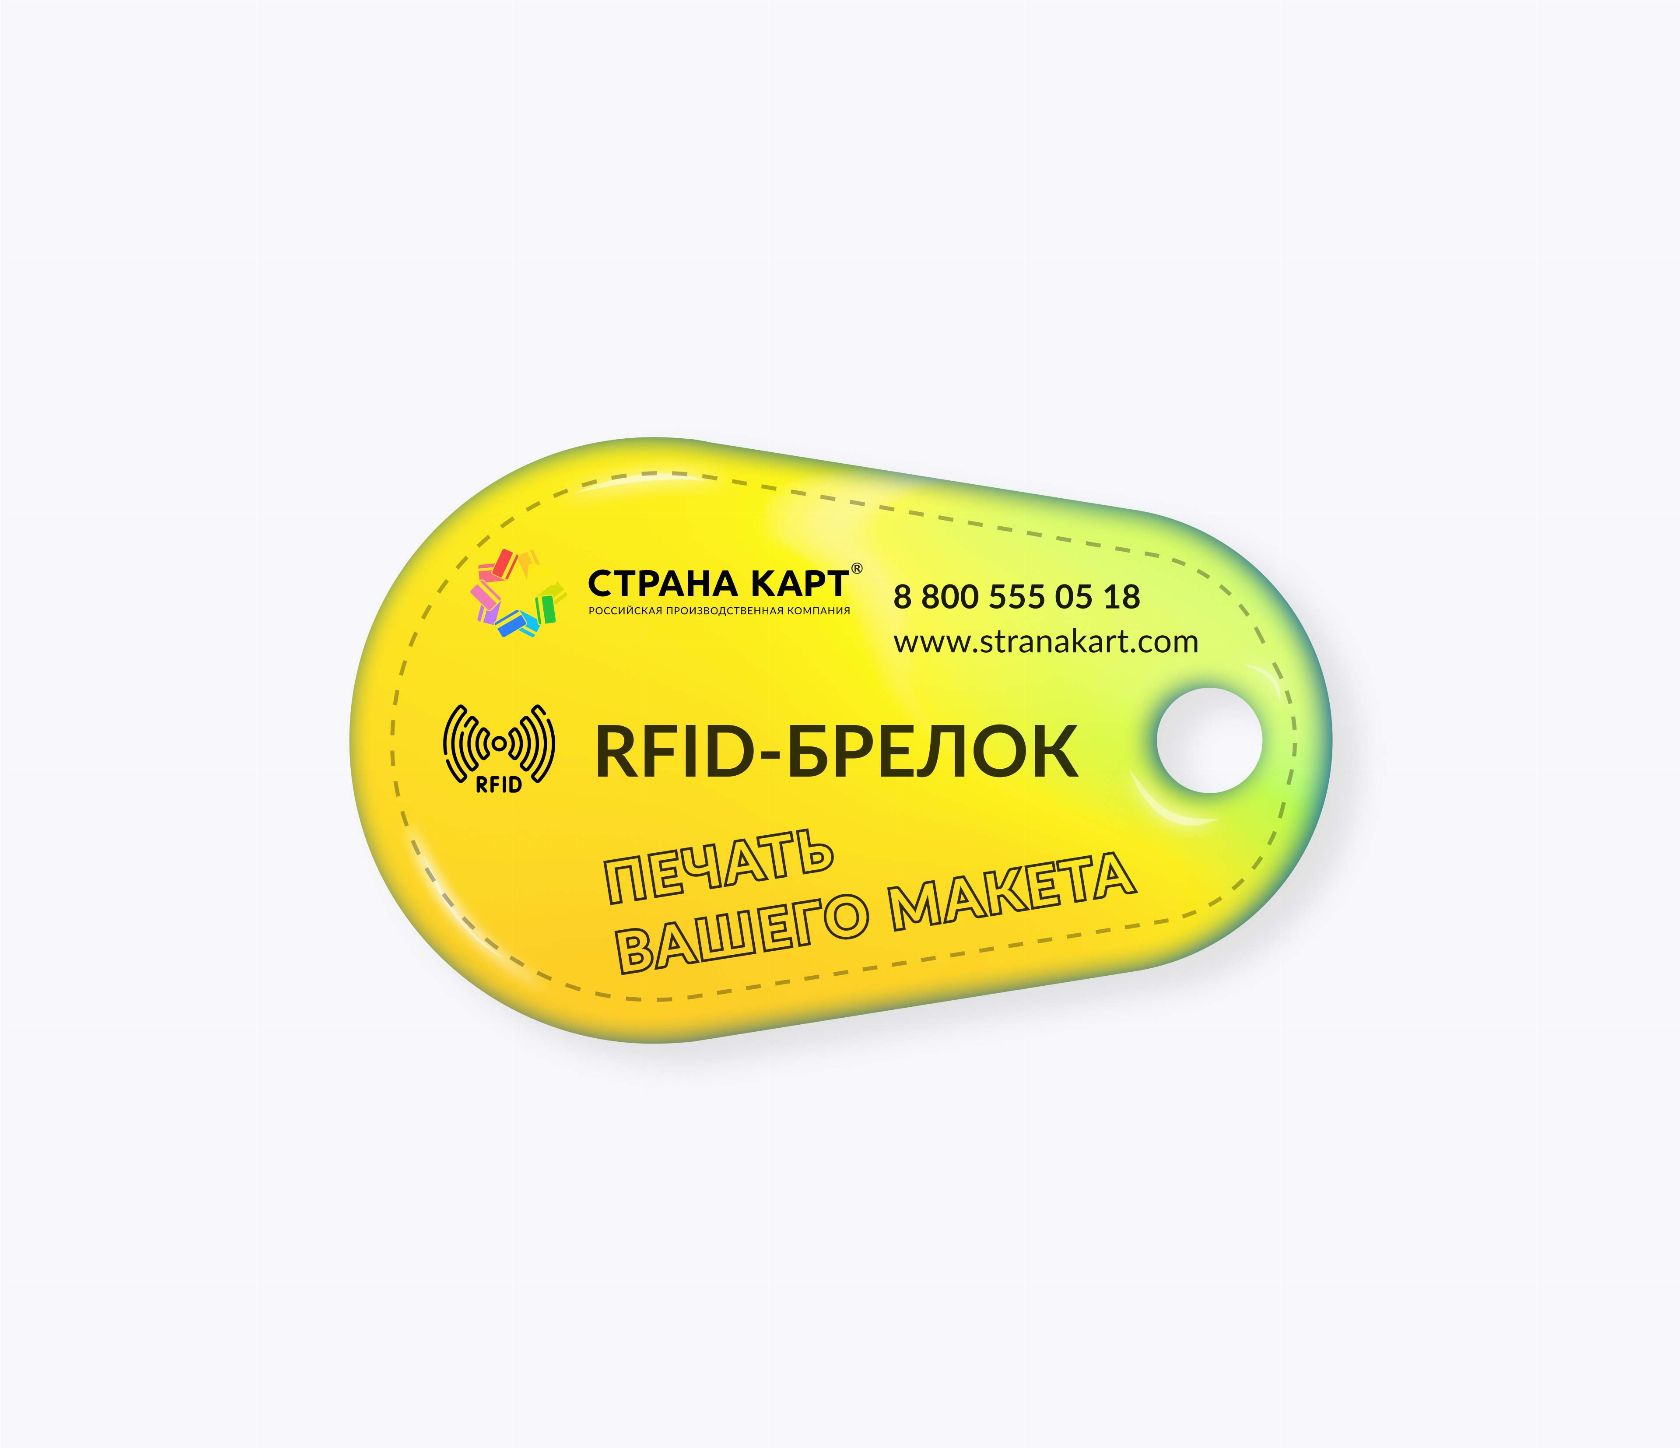 Каплевидные RFID-брелоки NEOKEY® с чипом и вашим дизайном Каплевидные RFID-брелоки NEOKEY® с чипом и вашим дизайном